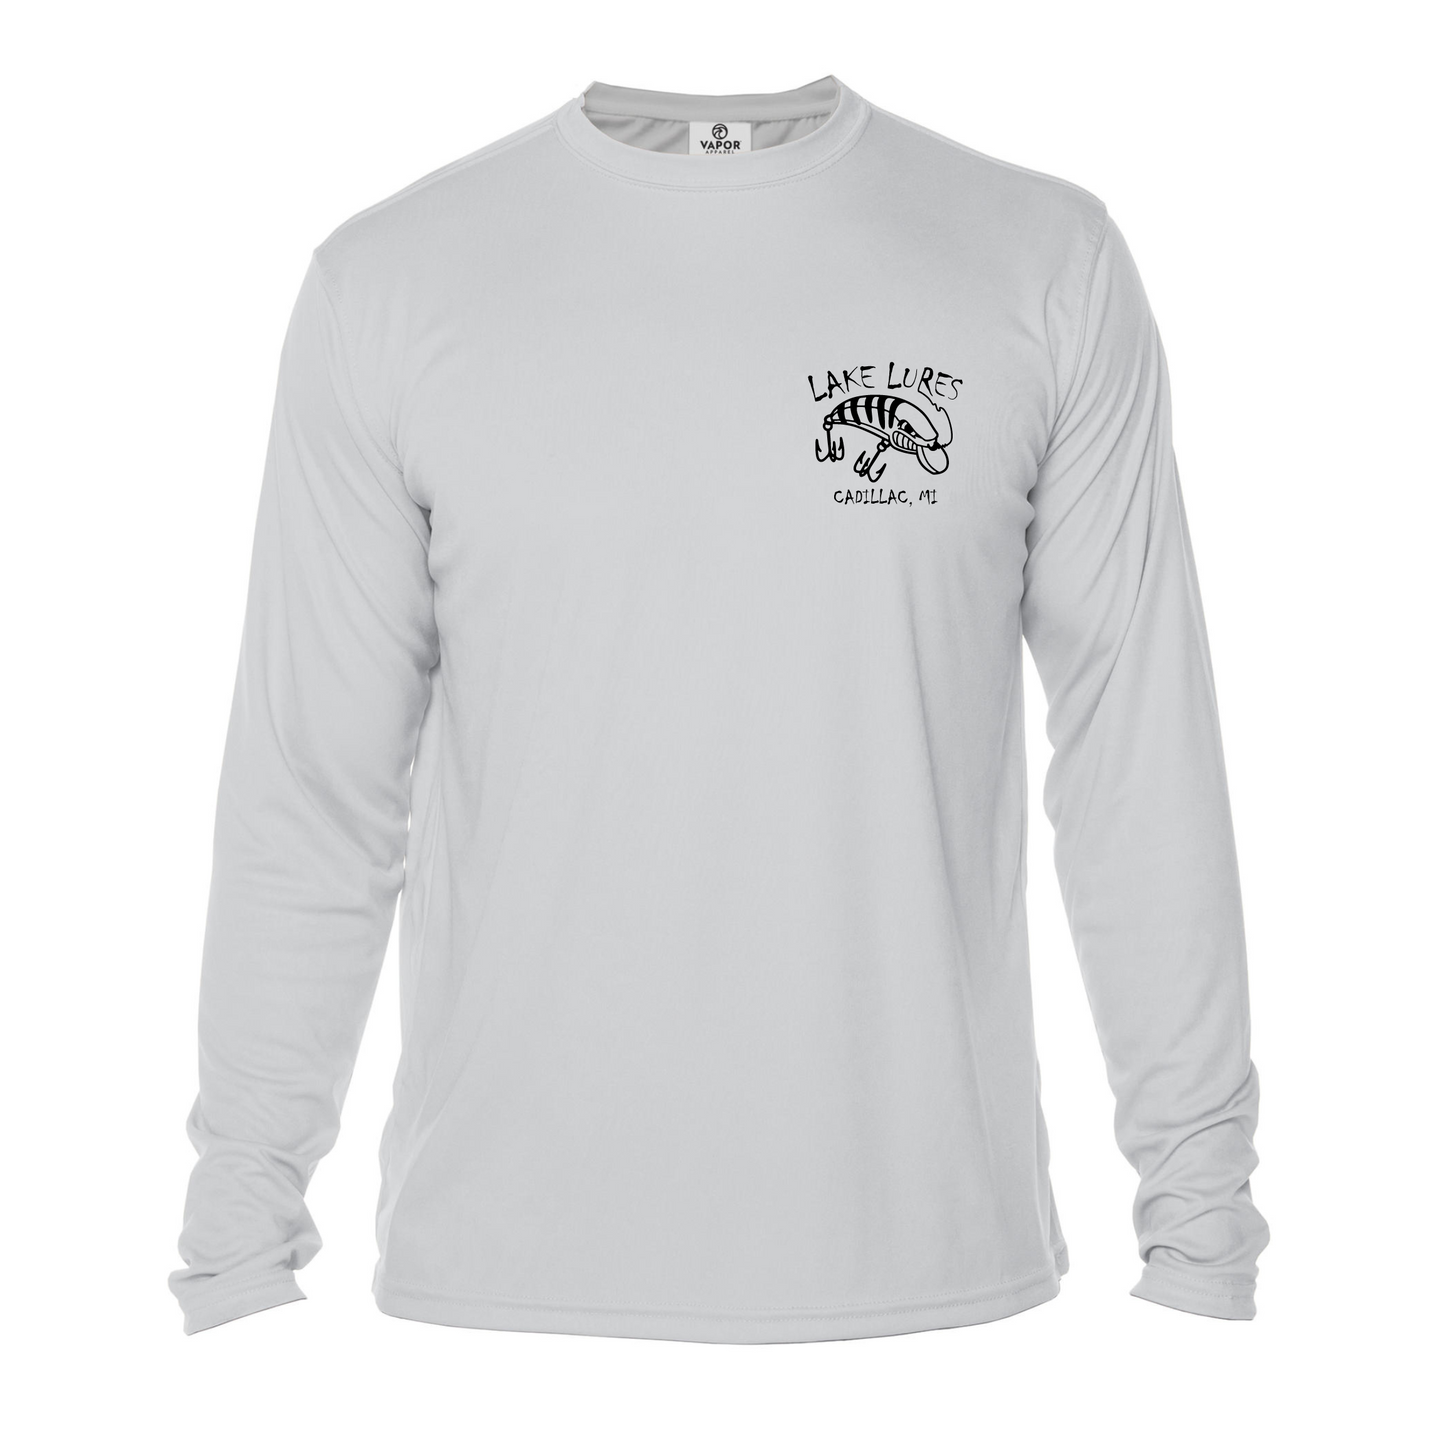 Chasin' Tail Bass Fishing Dri-Fit Long Sleeve Shirt